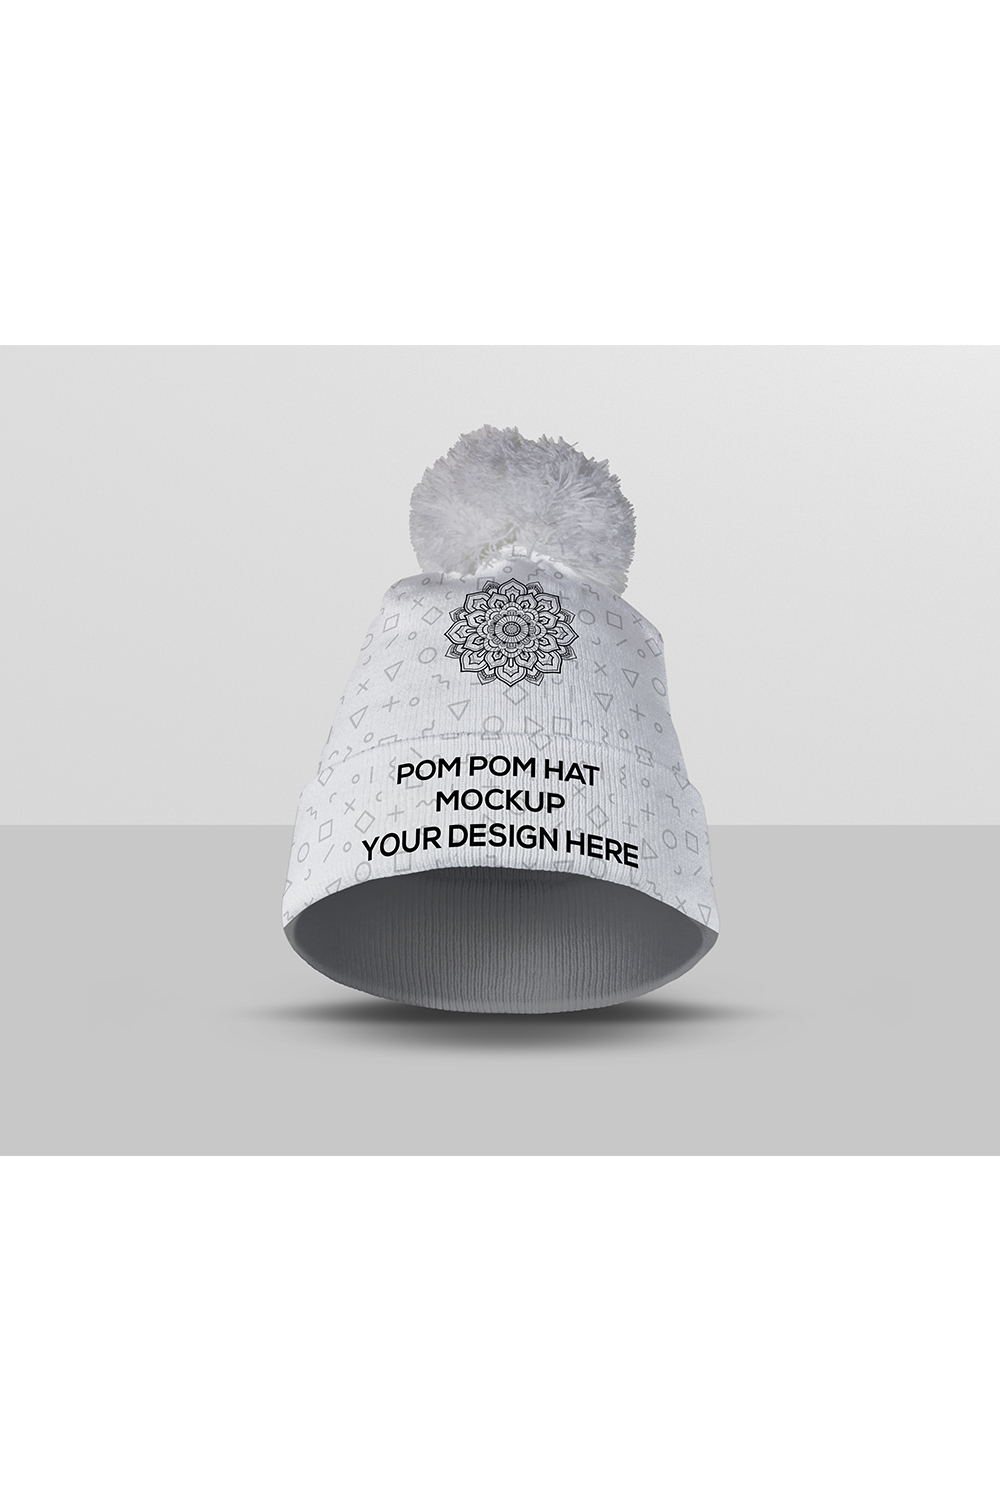 Pom Pom Hat Mockup pinterest preview image.